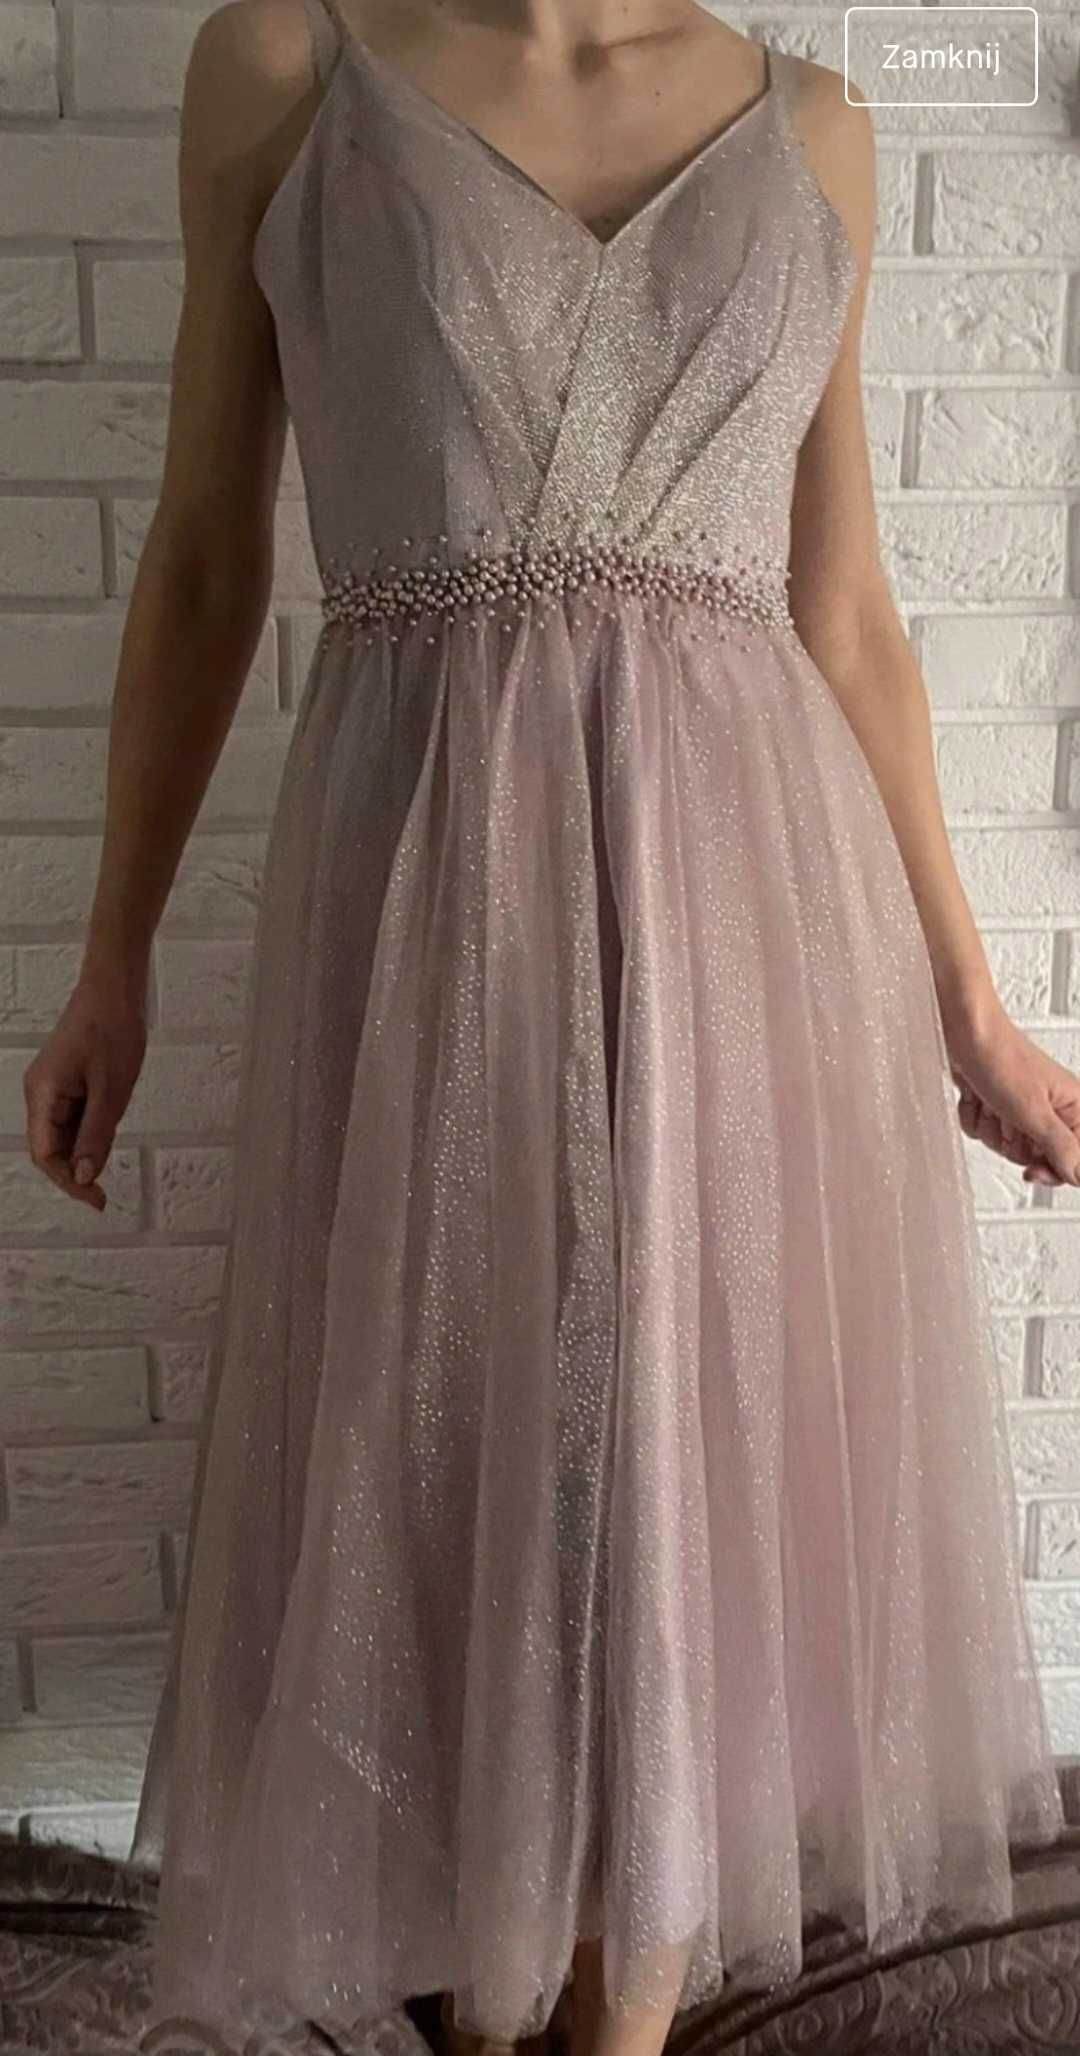 Suknia z tiulu, wesele, bal/sukienka tiul